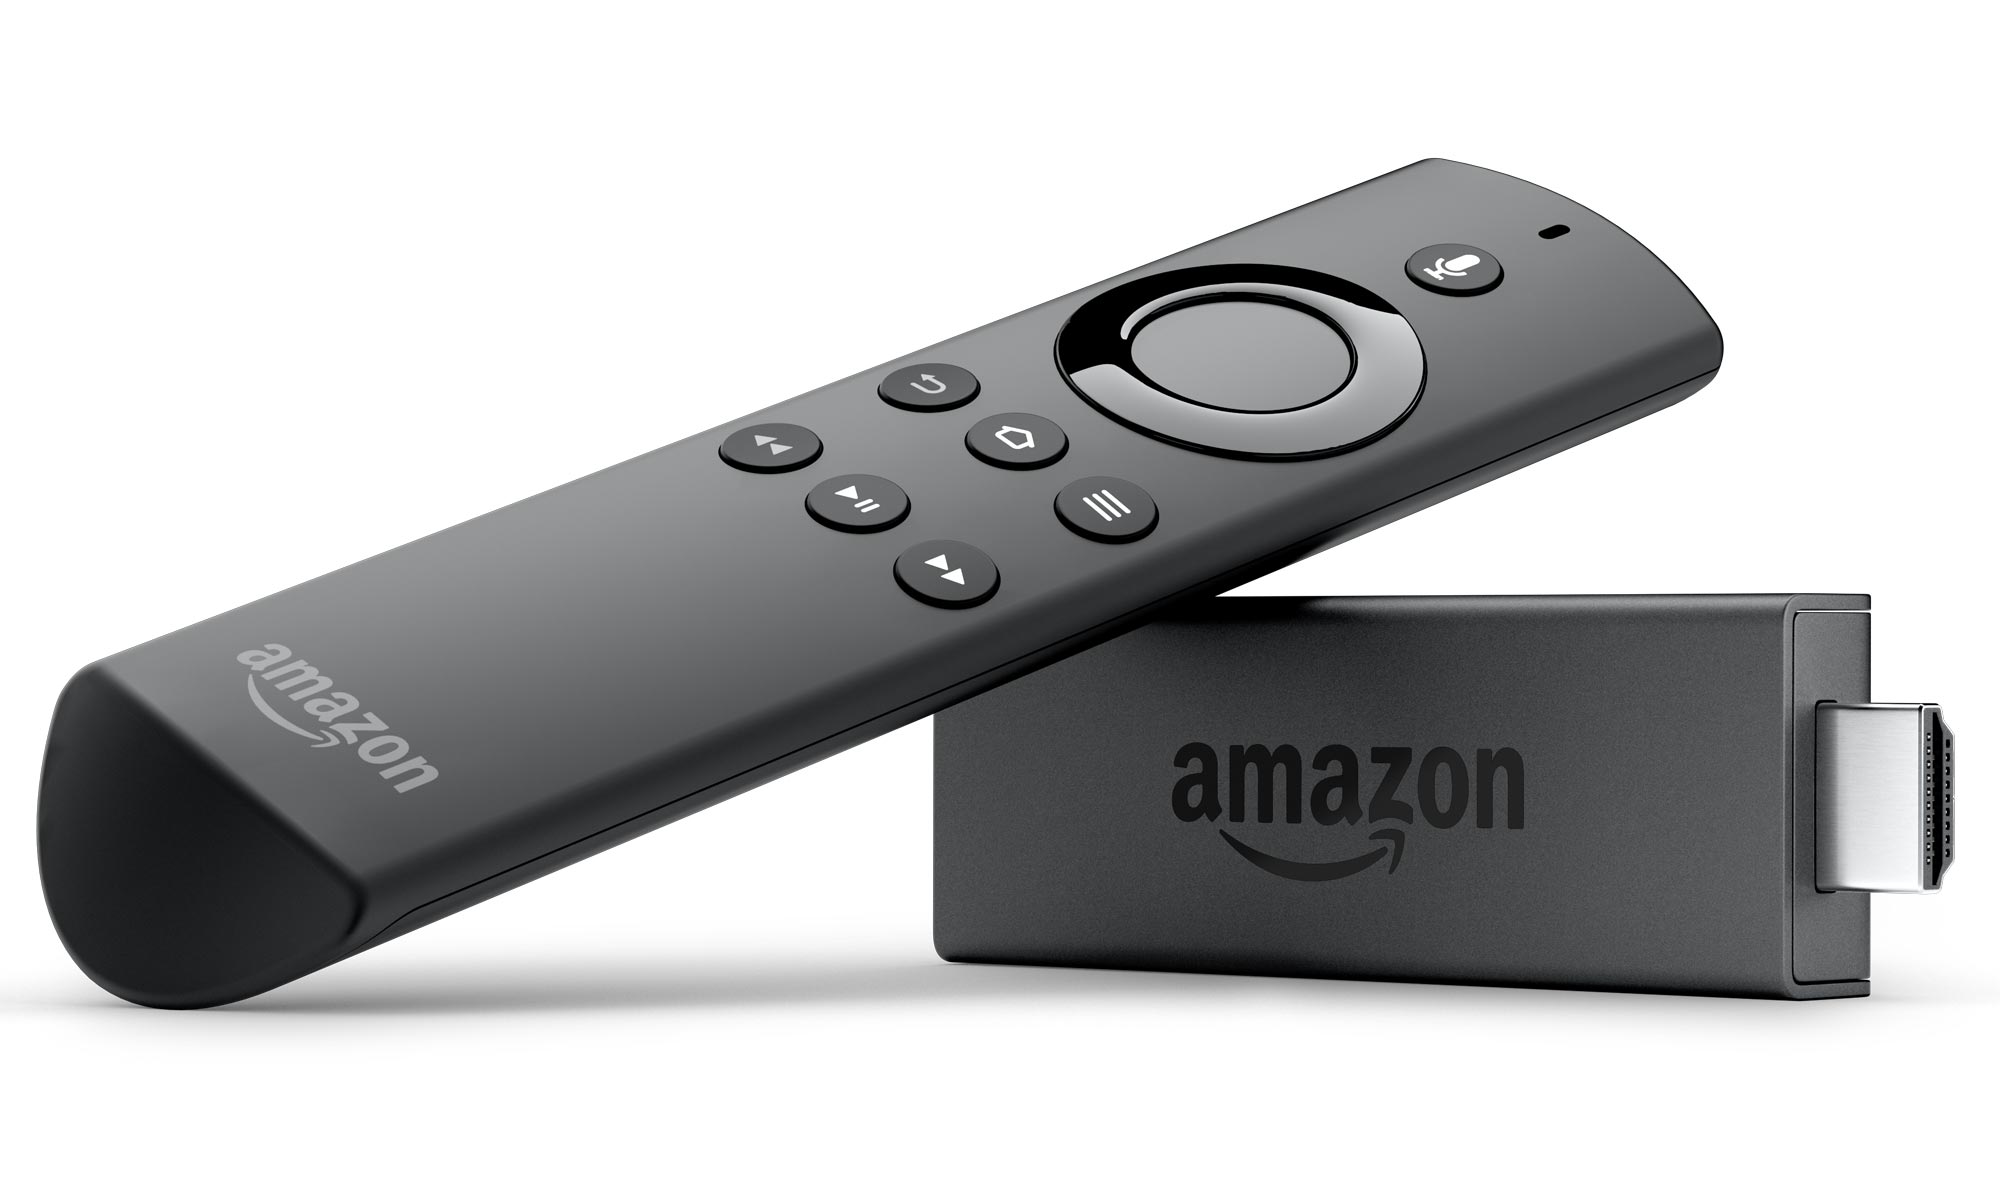 Amazon Fire TV Stick review